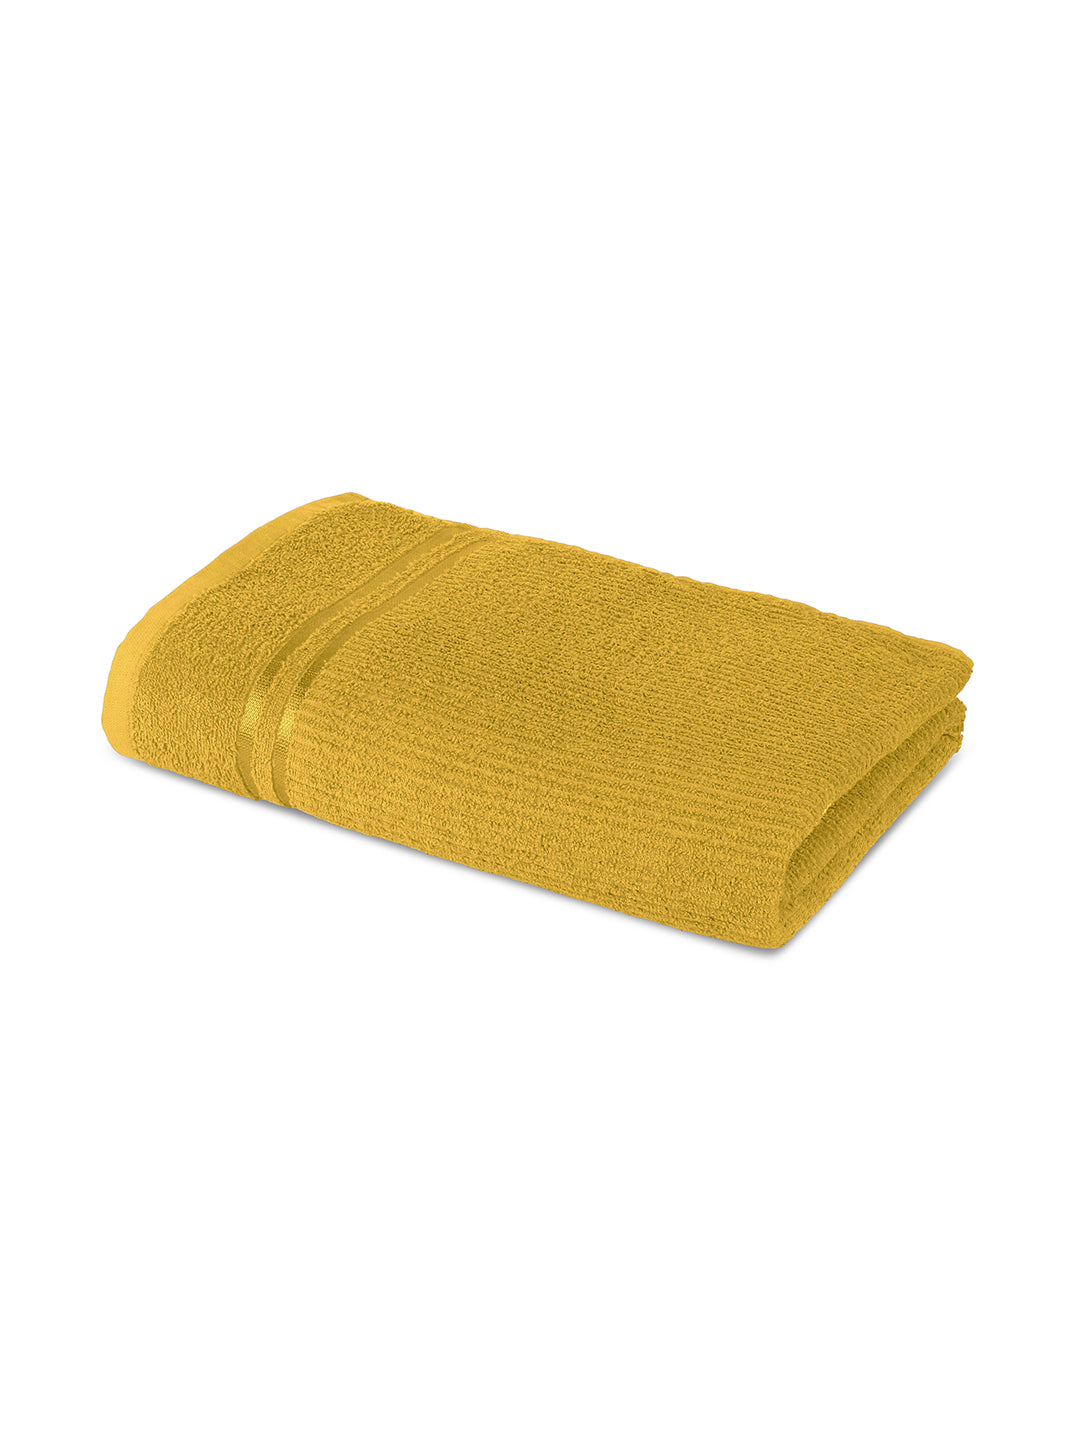 Comfort Classic Quickdry Bath Towel